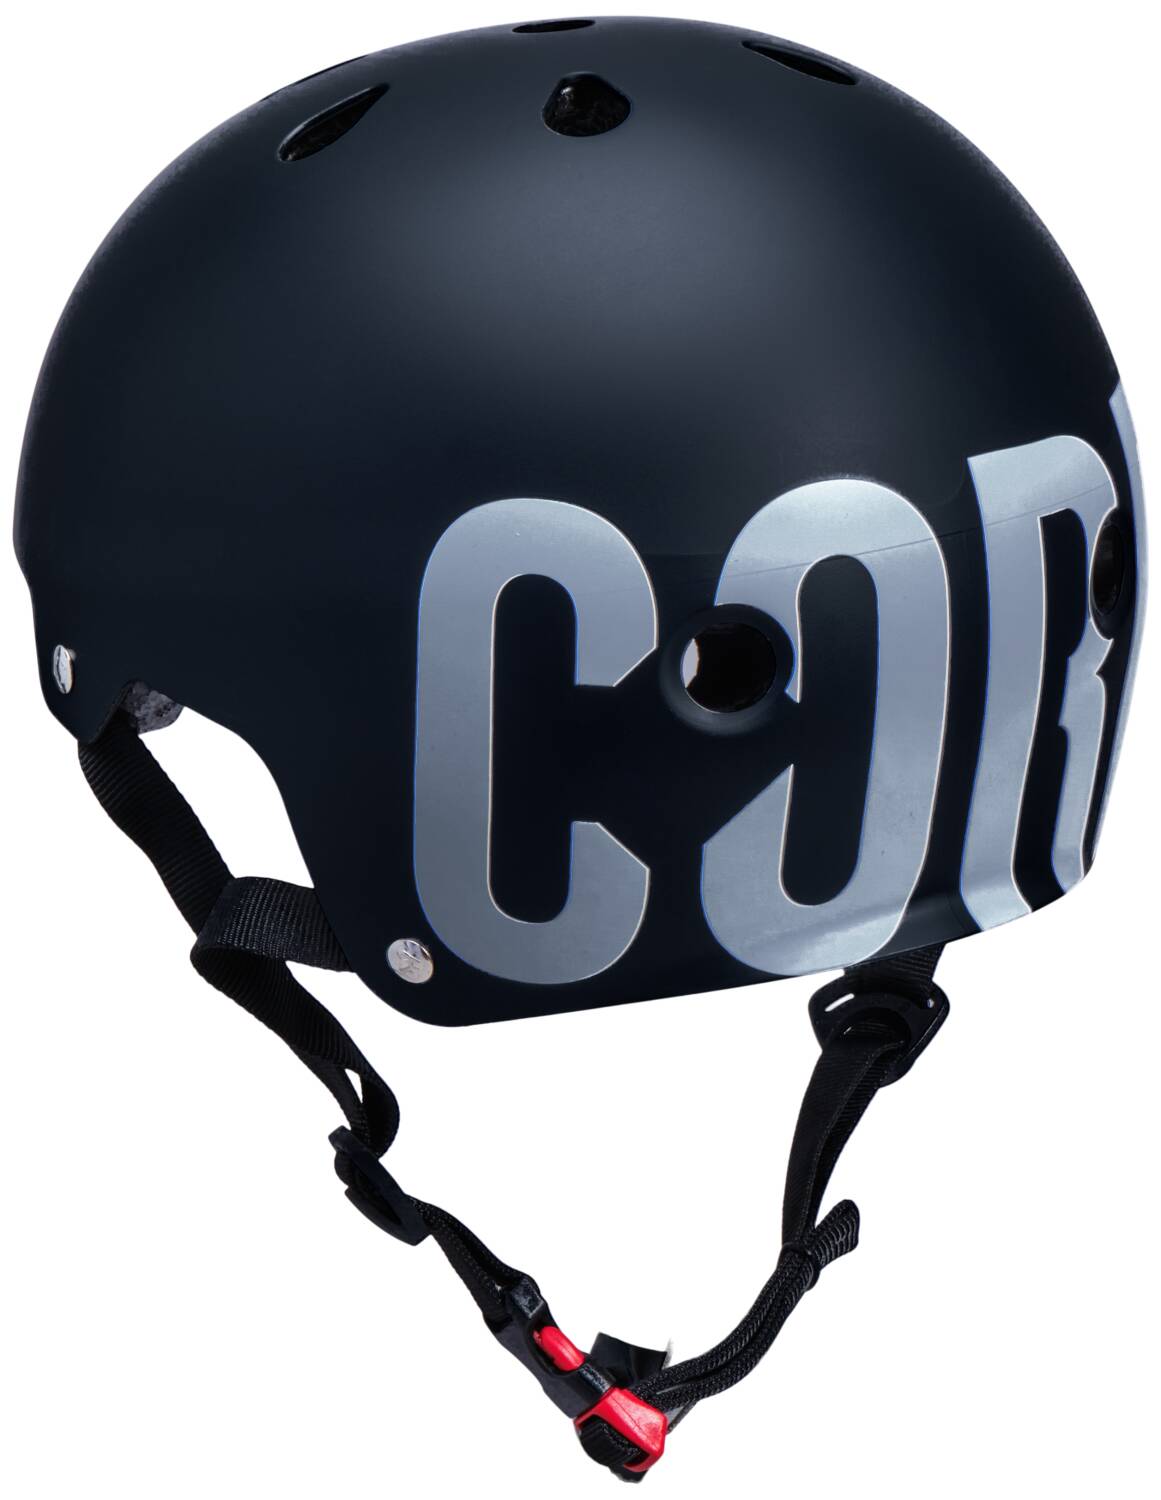 Core Street bike and skate helmet, Helmet Sports black, SX-S